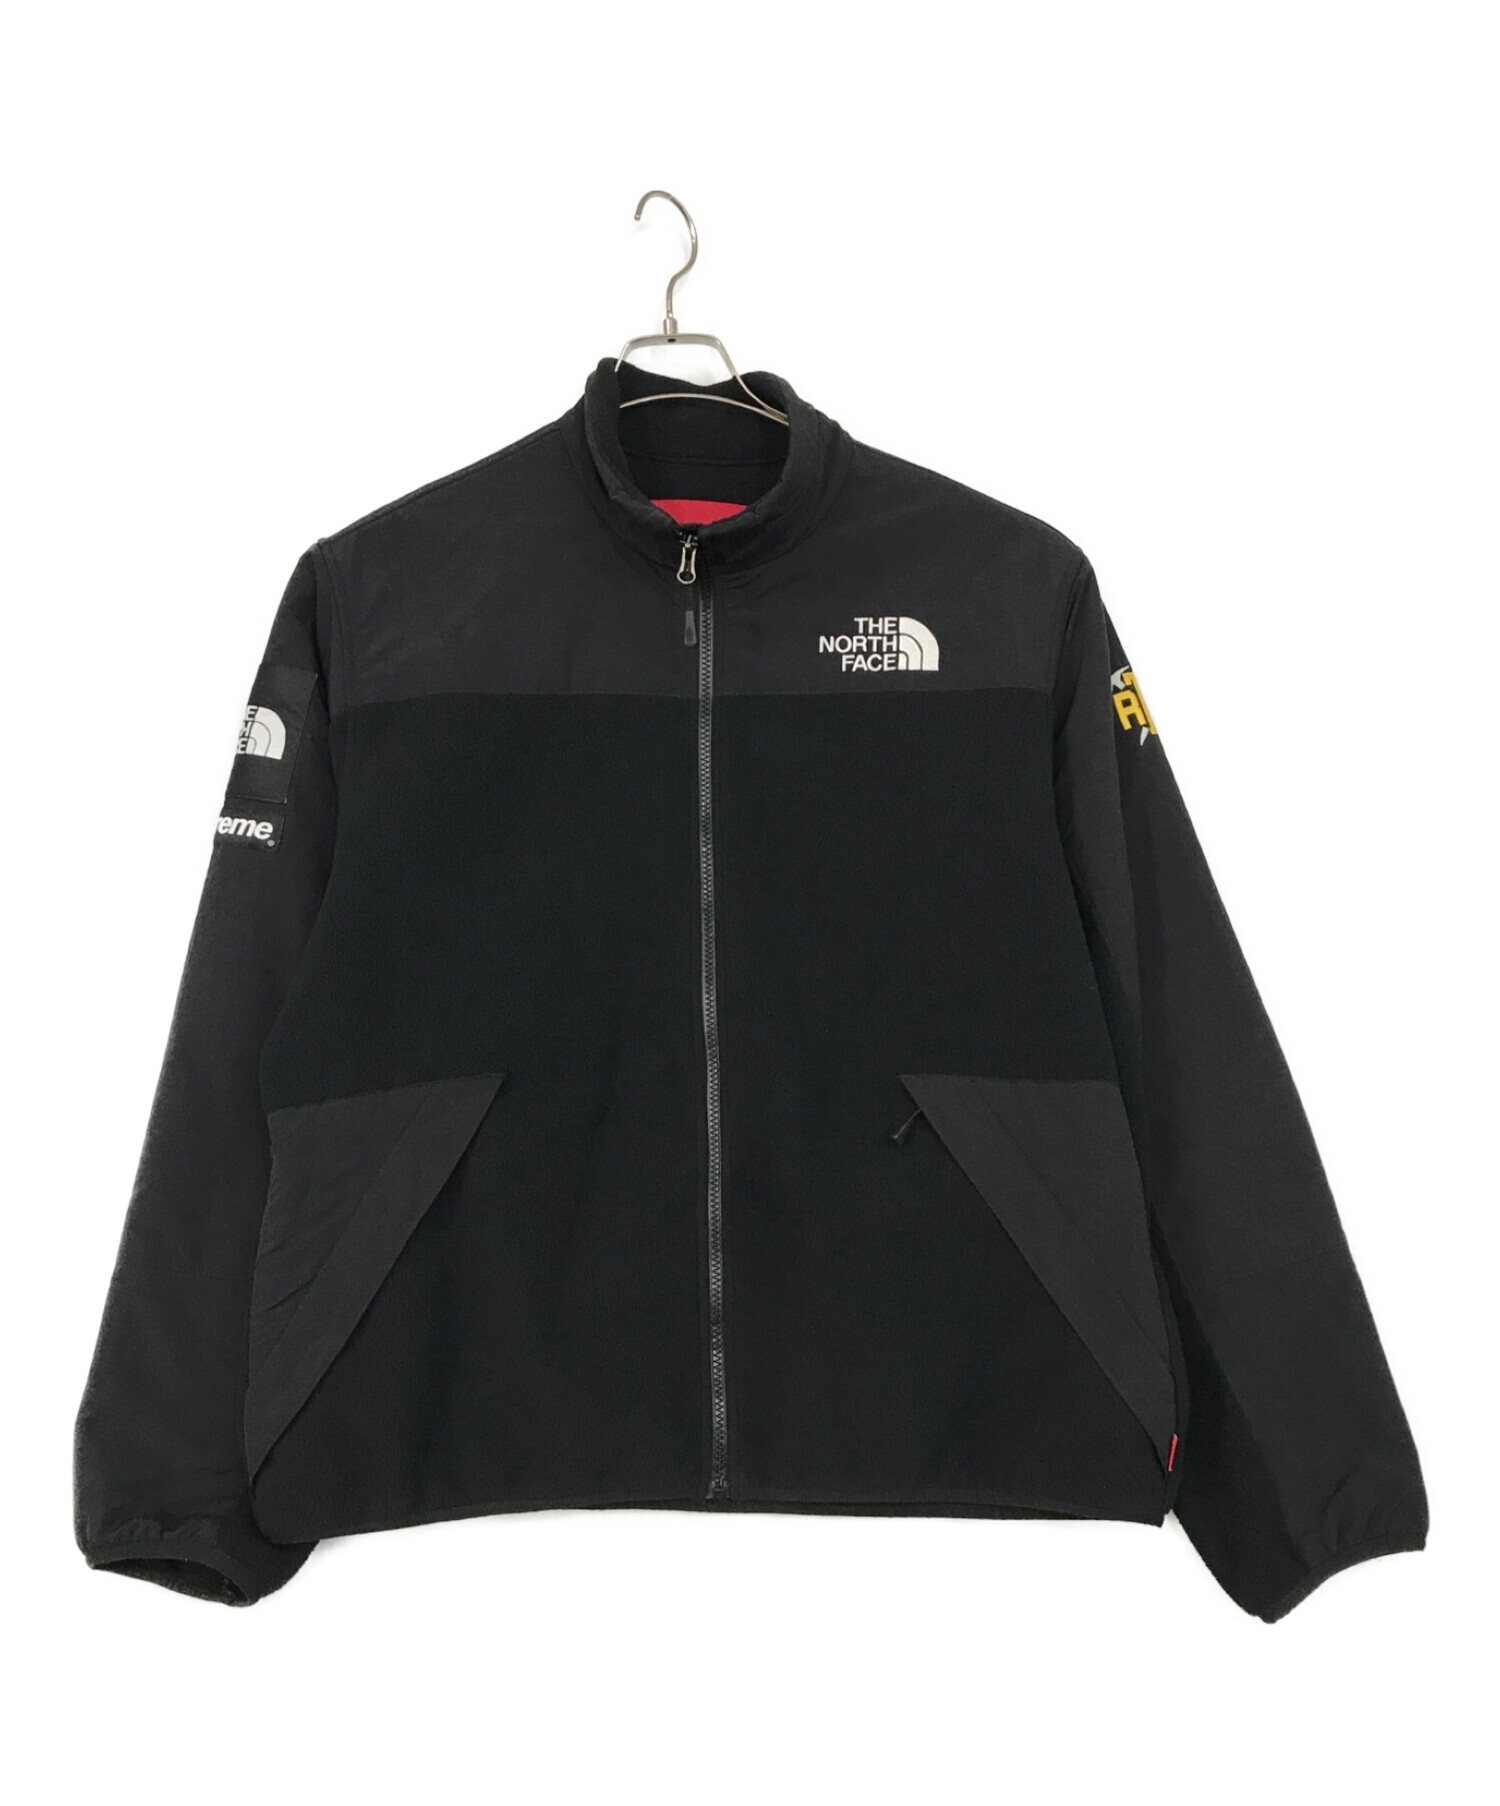 RTG Fleece Jacket Black Mサイズ